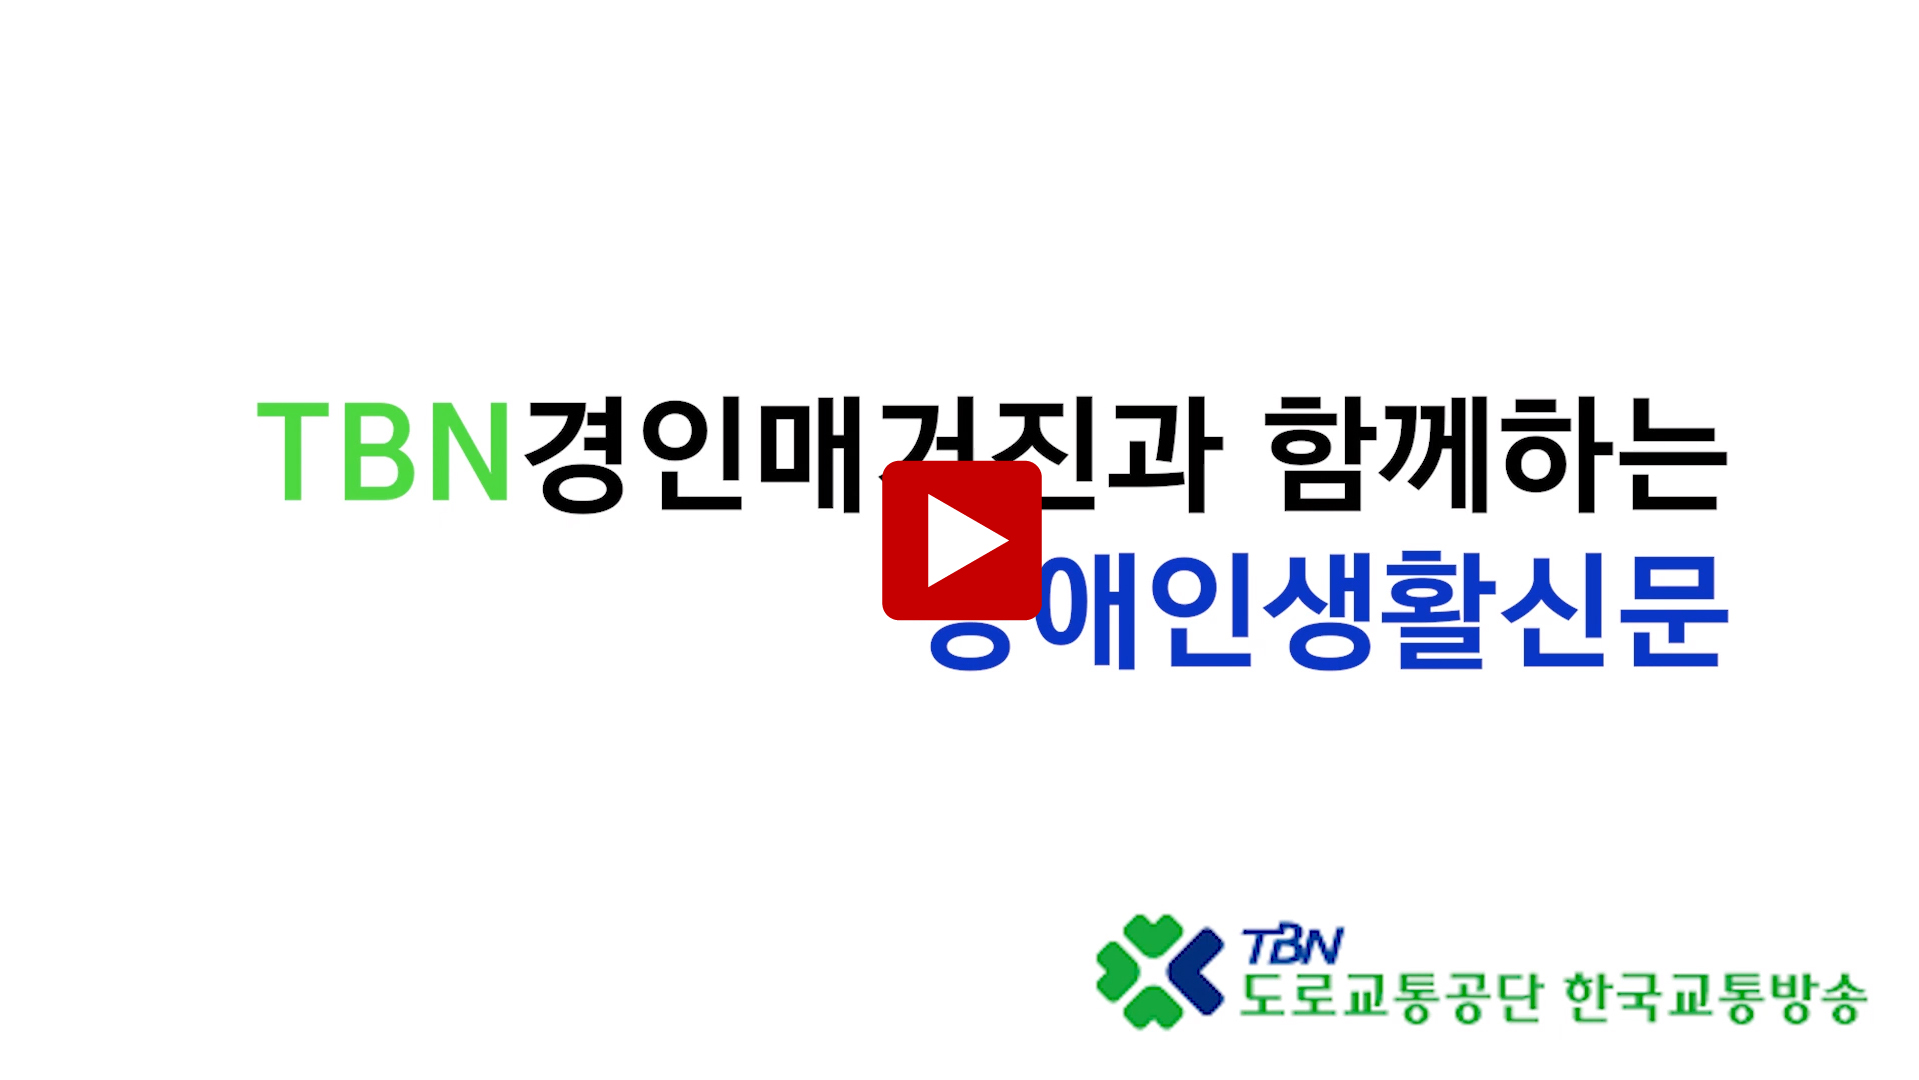 TBN경인매거진과 함께하는 장애인생활신문 -2022년 2월 23일 방송